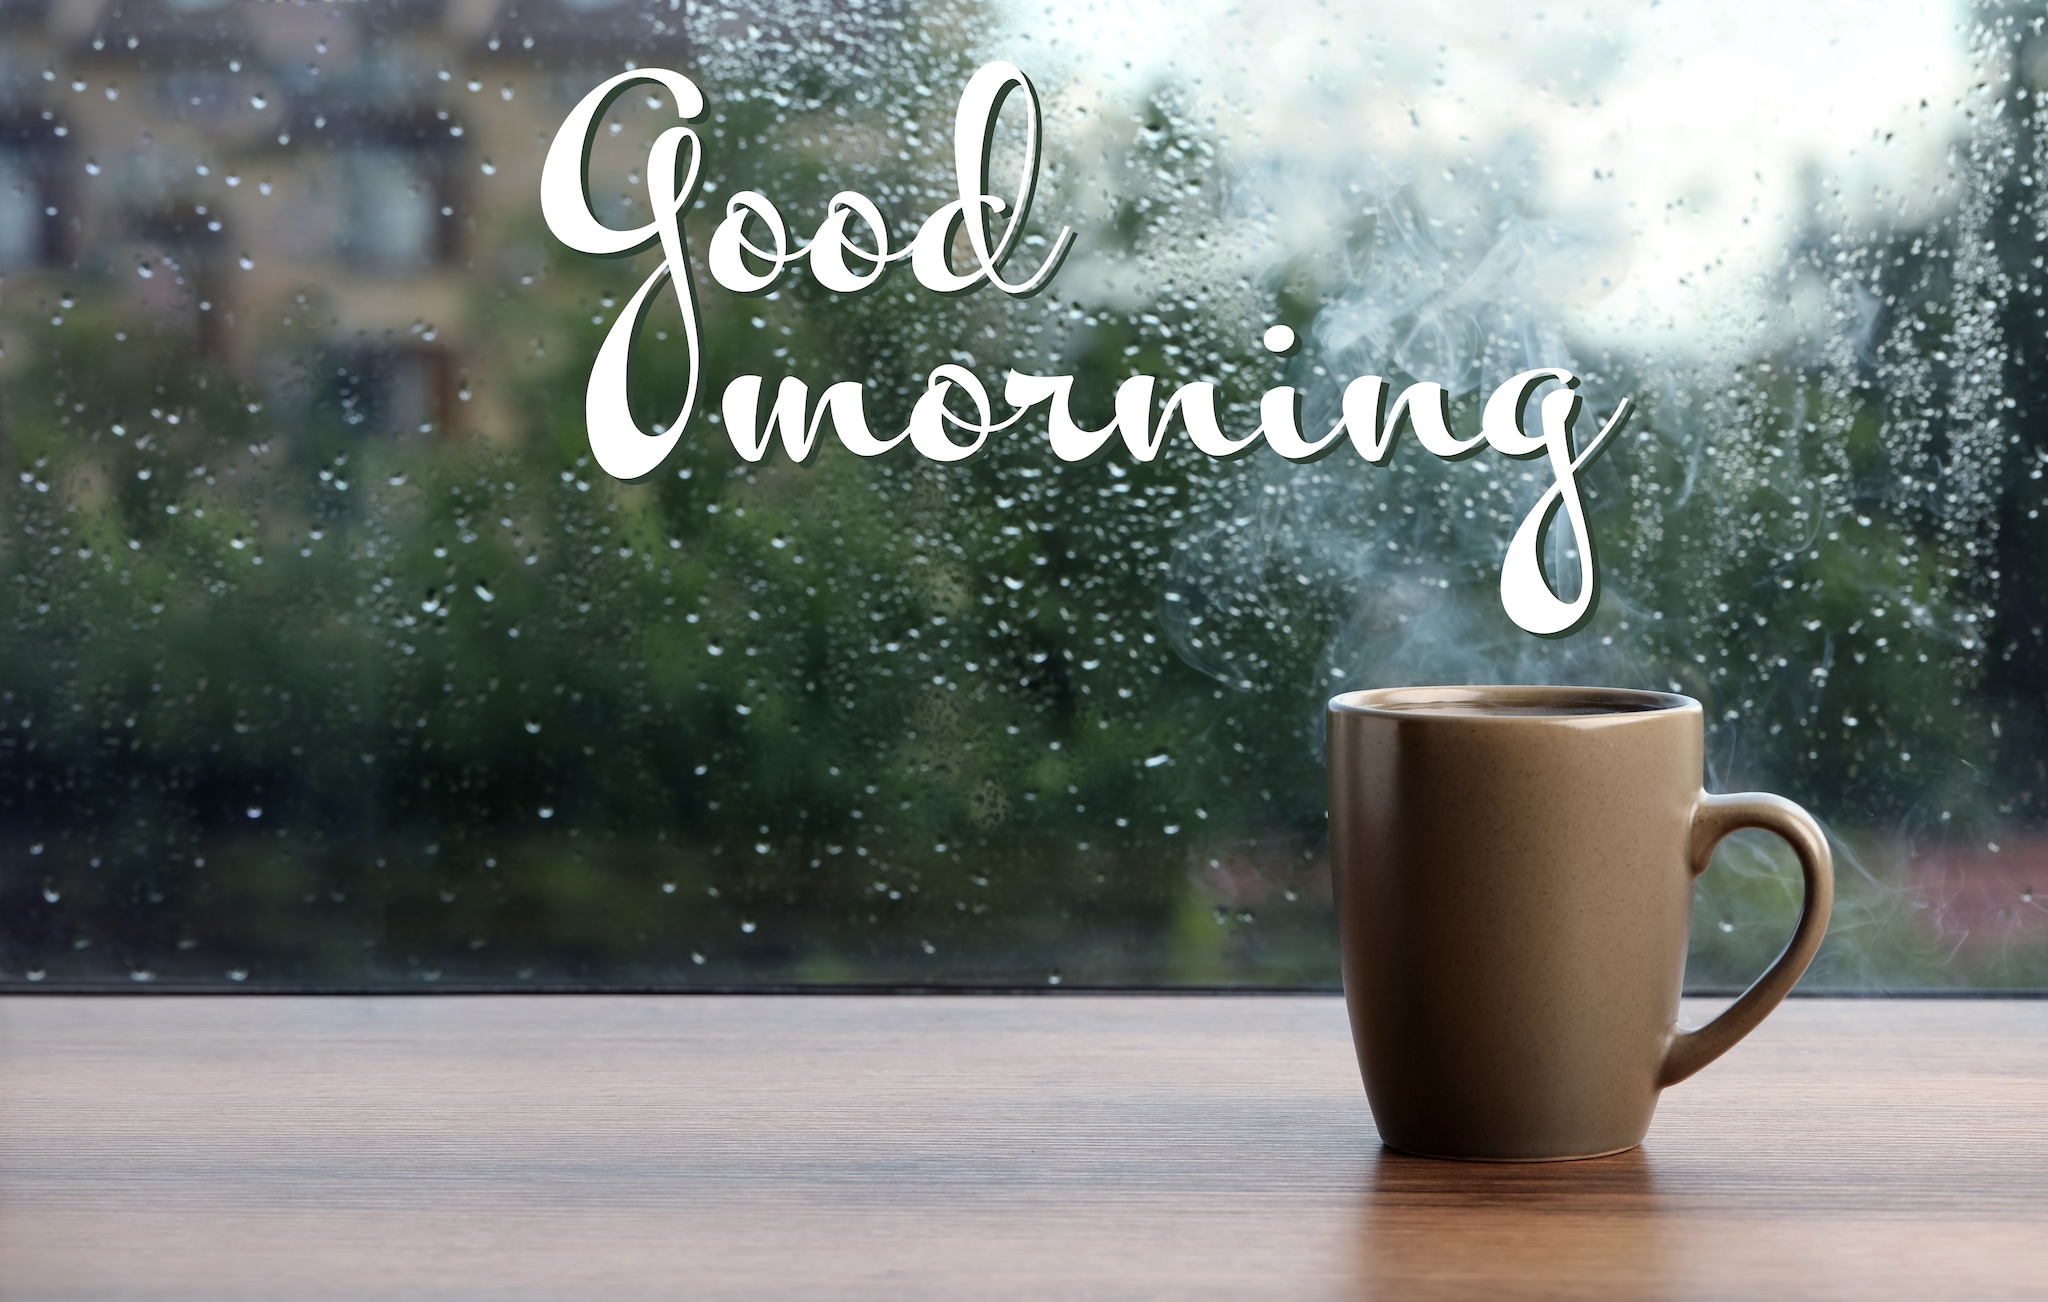 Best Morning coffee iPhone X HD Wallpapers - iLikeWallpaper